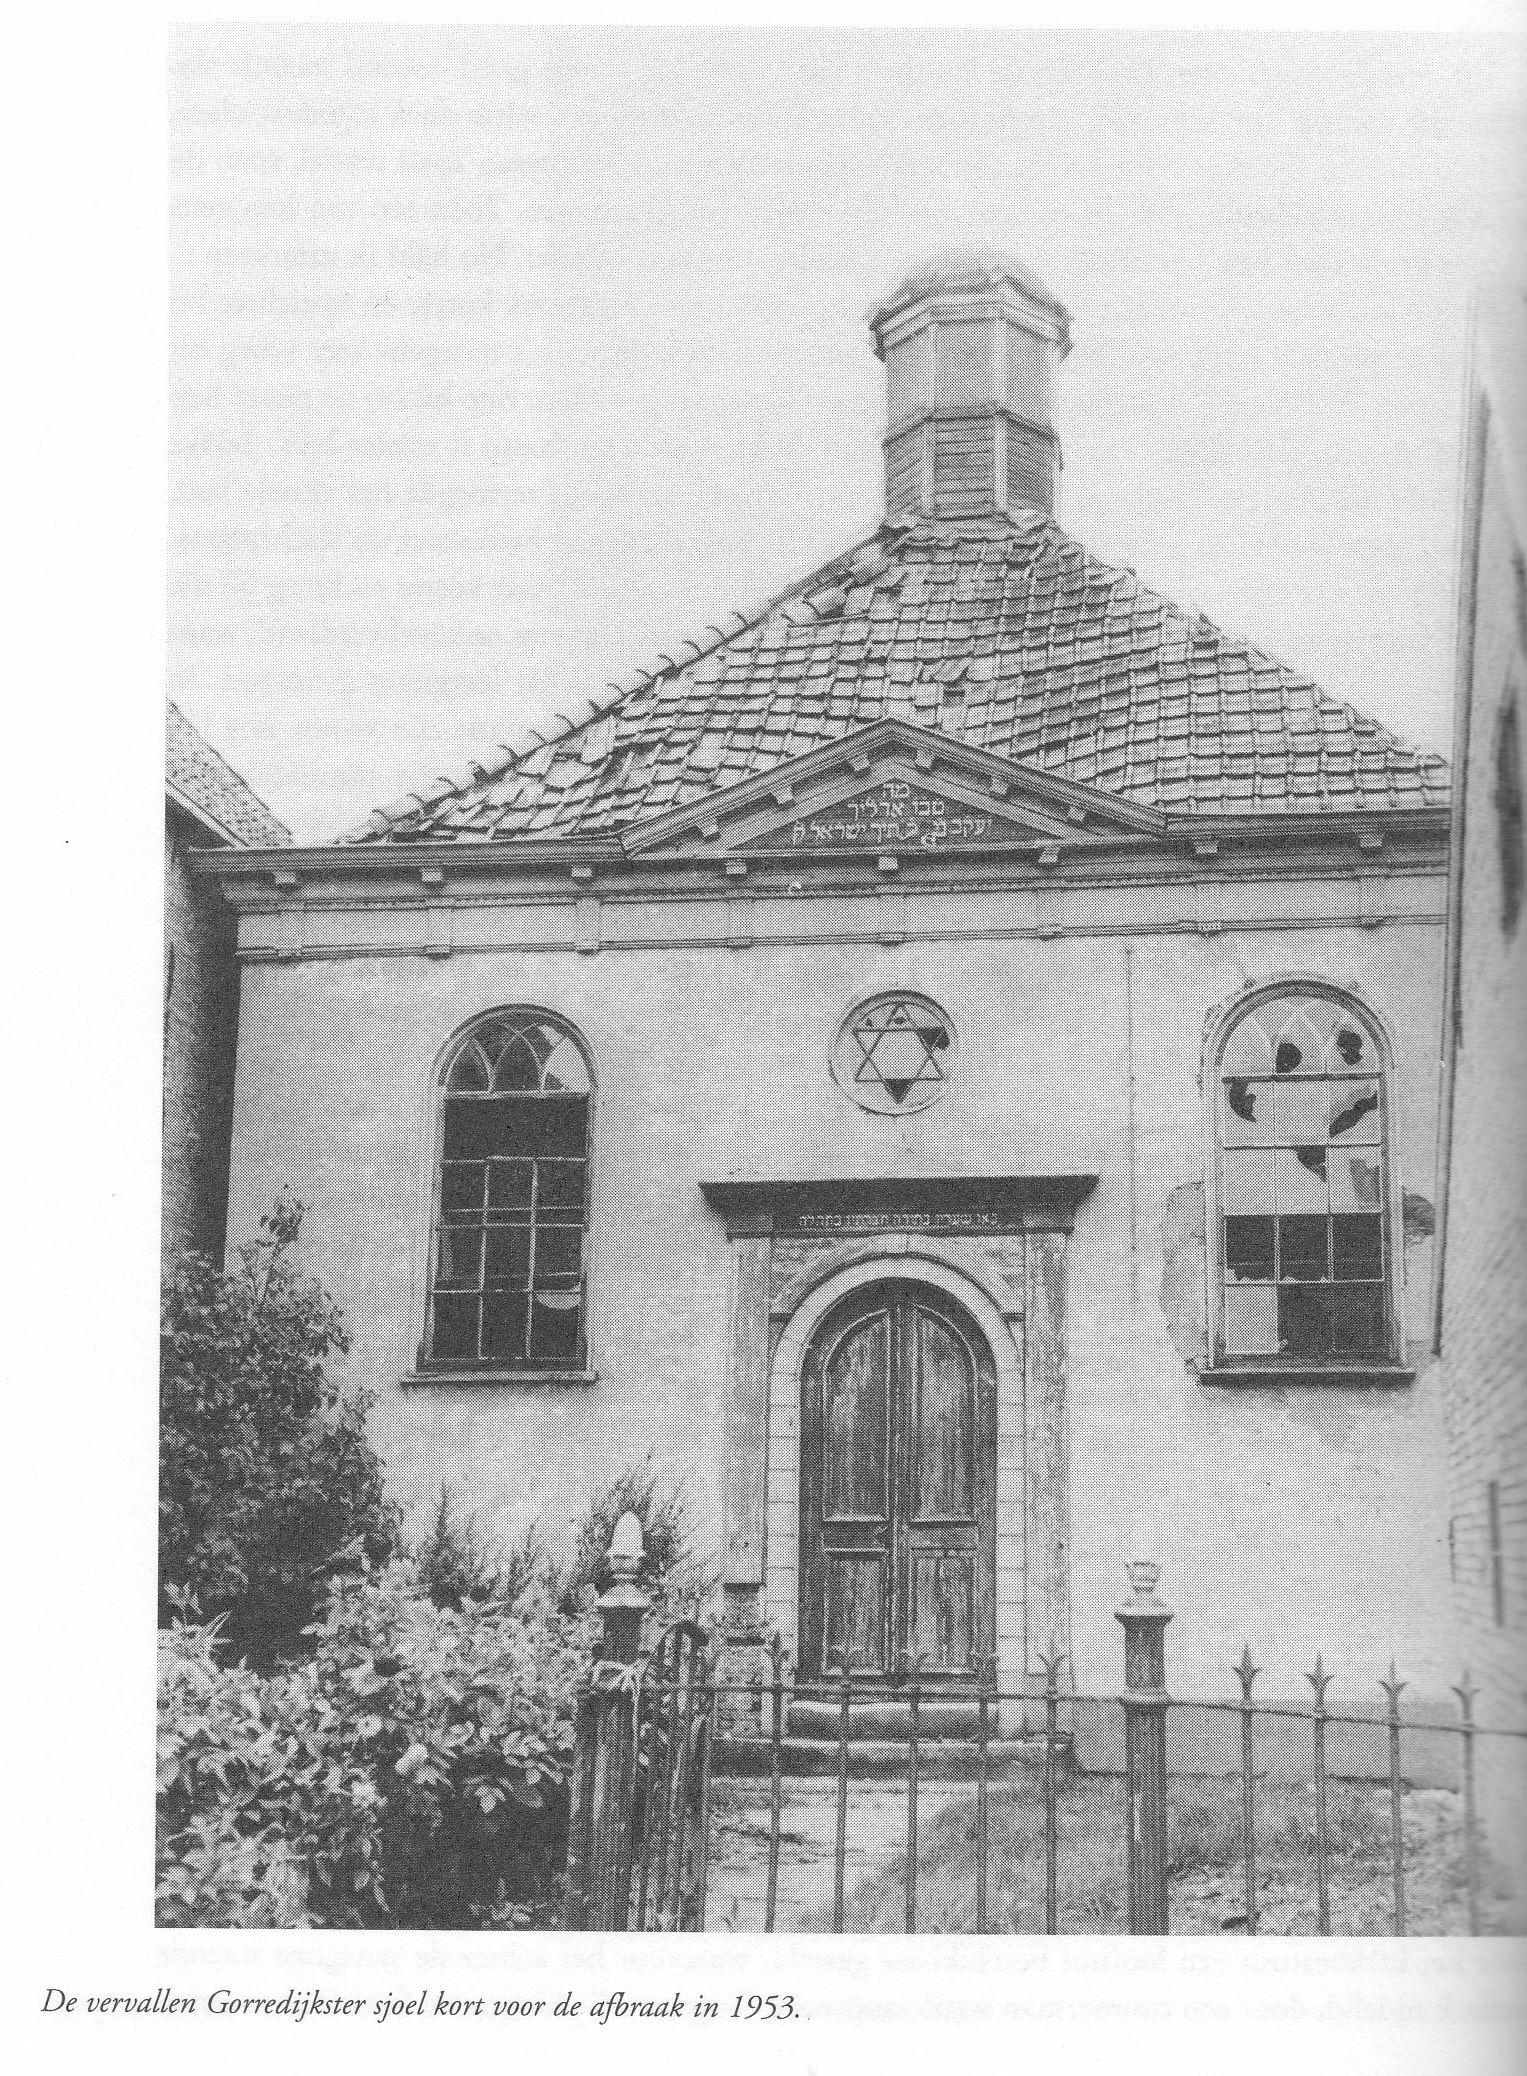 The Gorredijk synagogue before its demolition